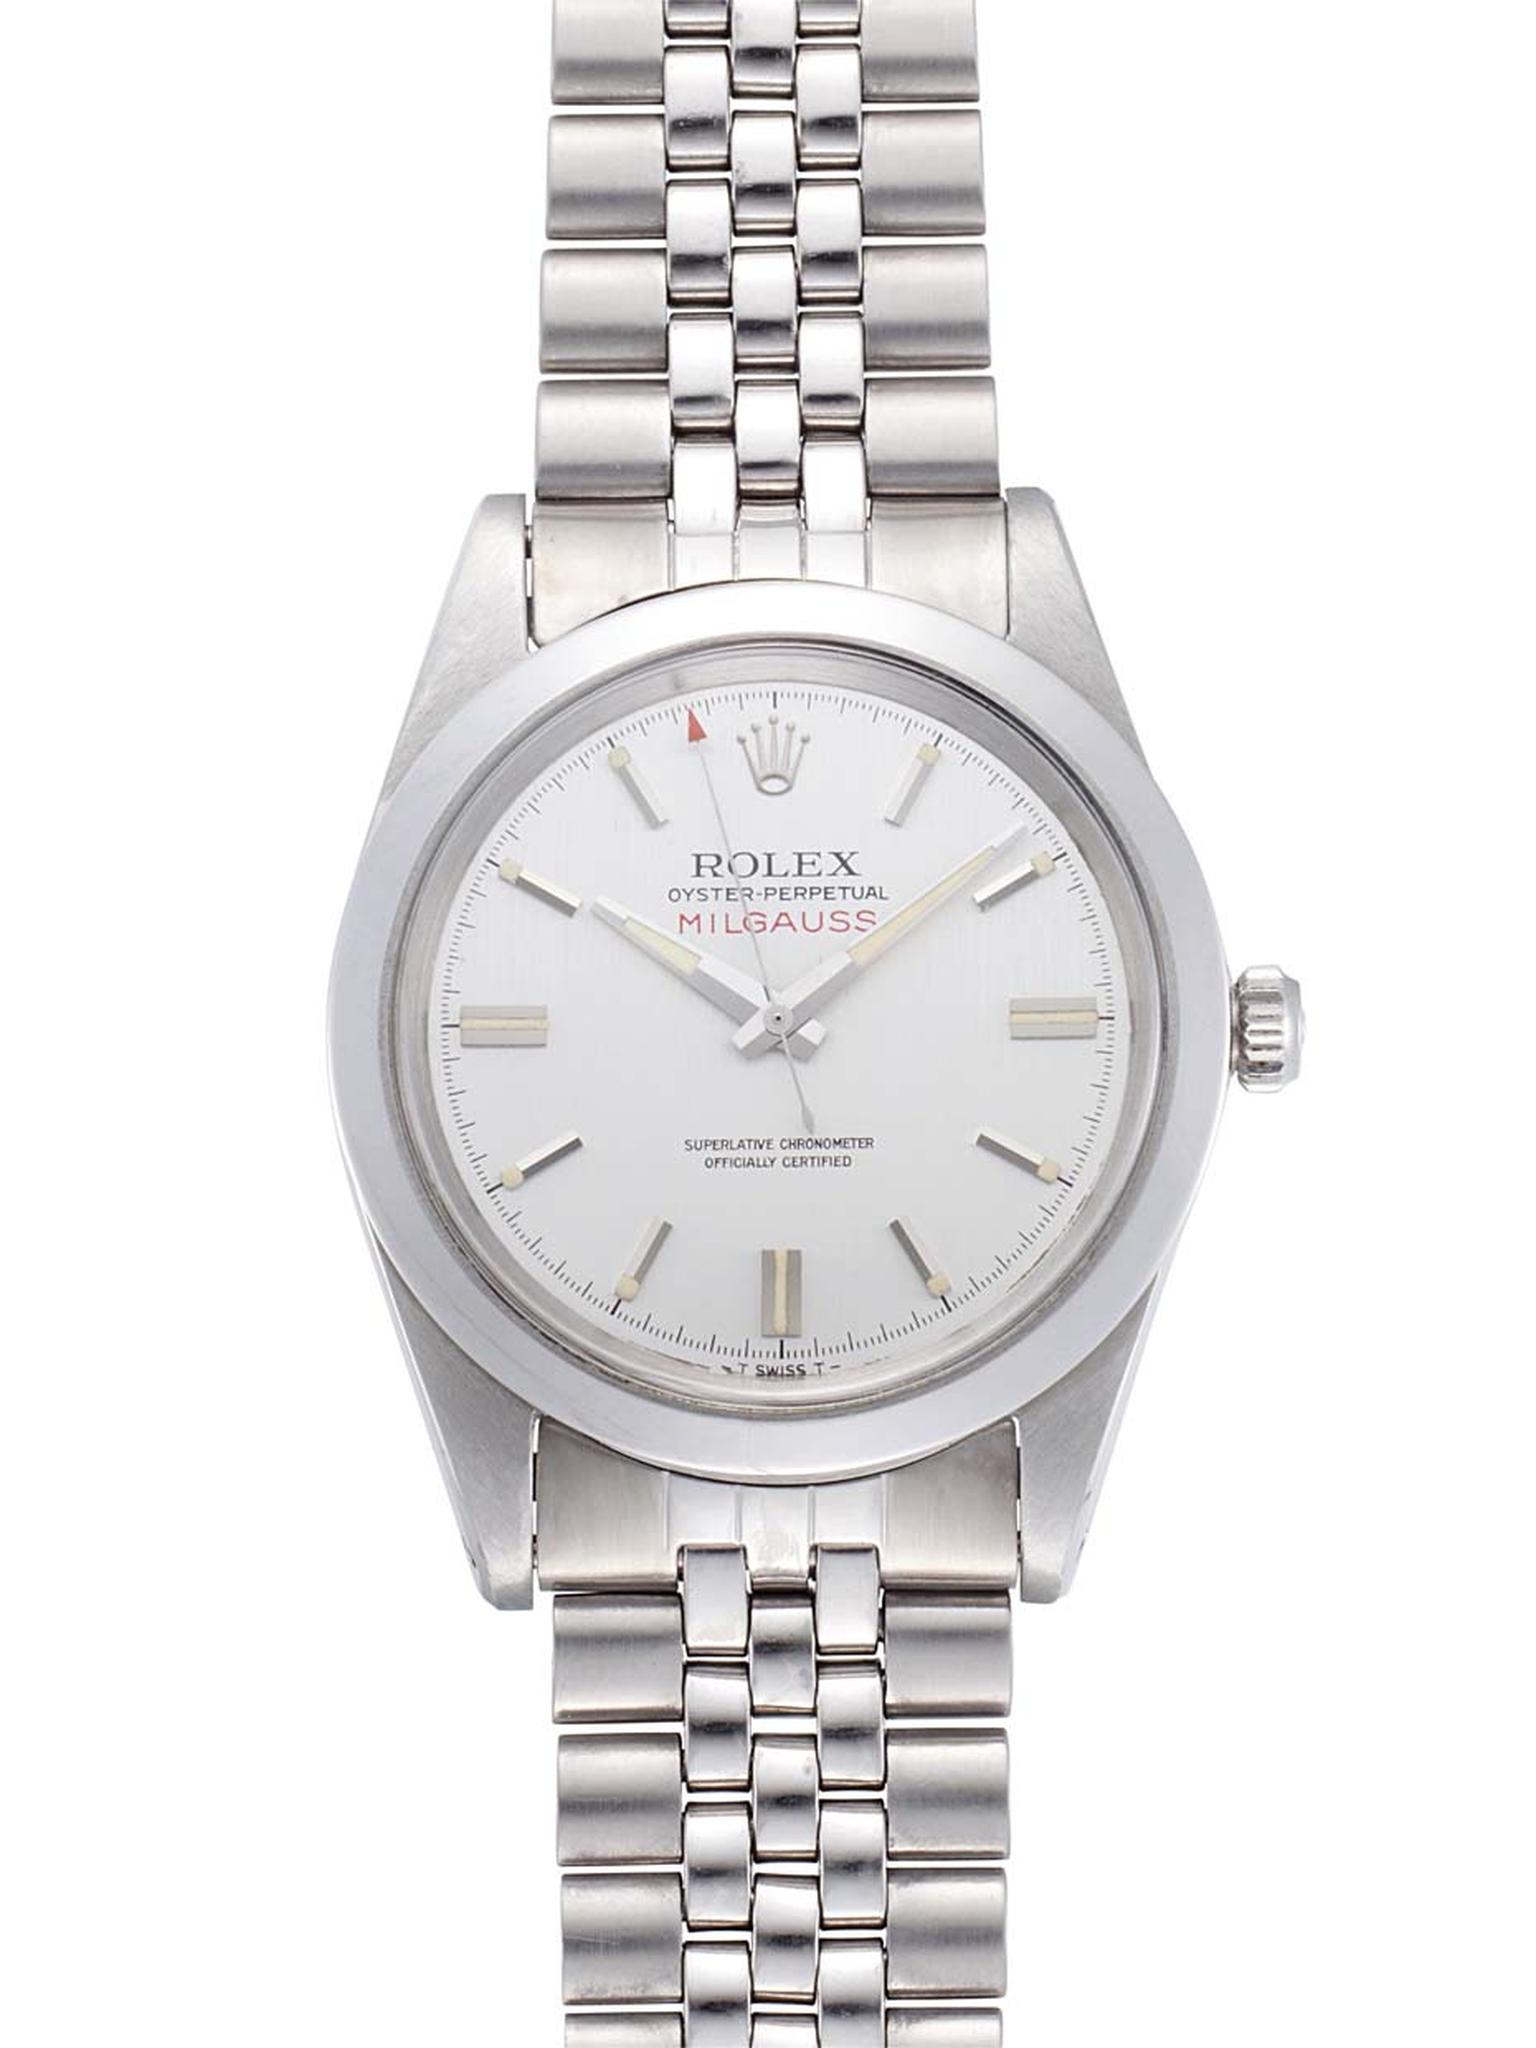 Christie's Watch Shop Rolex Oyster Perpetual Milgauss watch ($25,000).